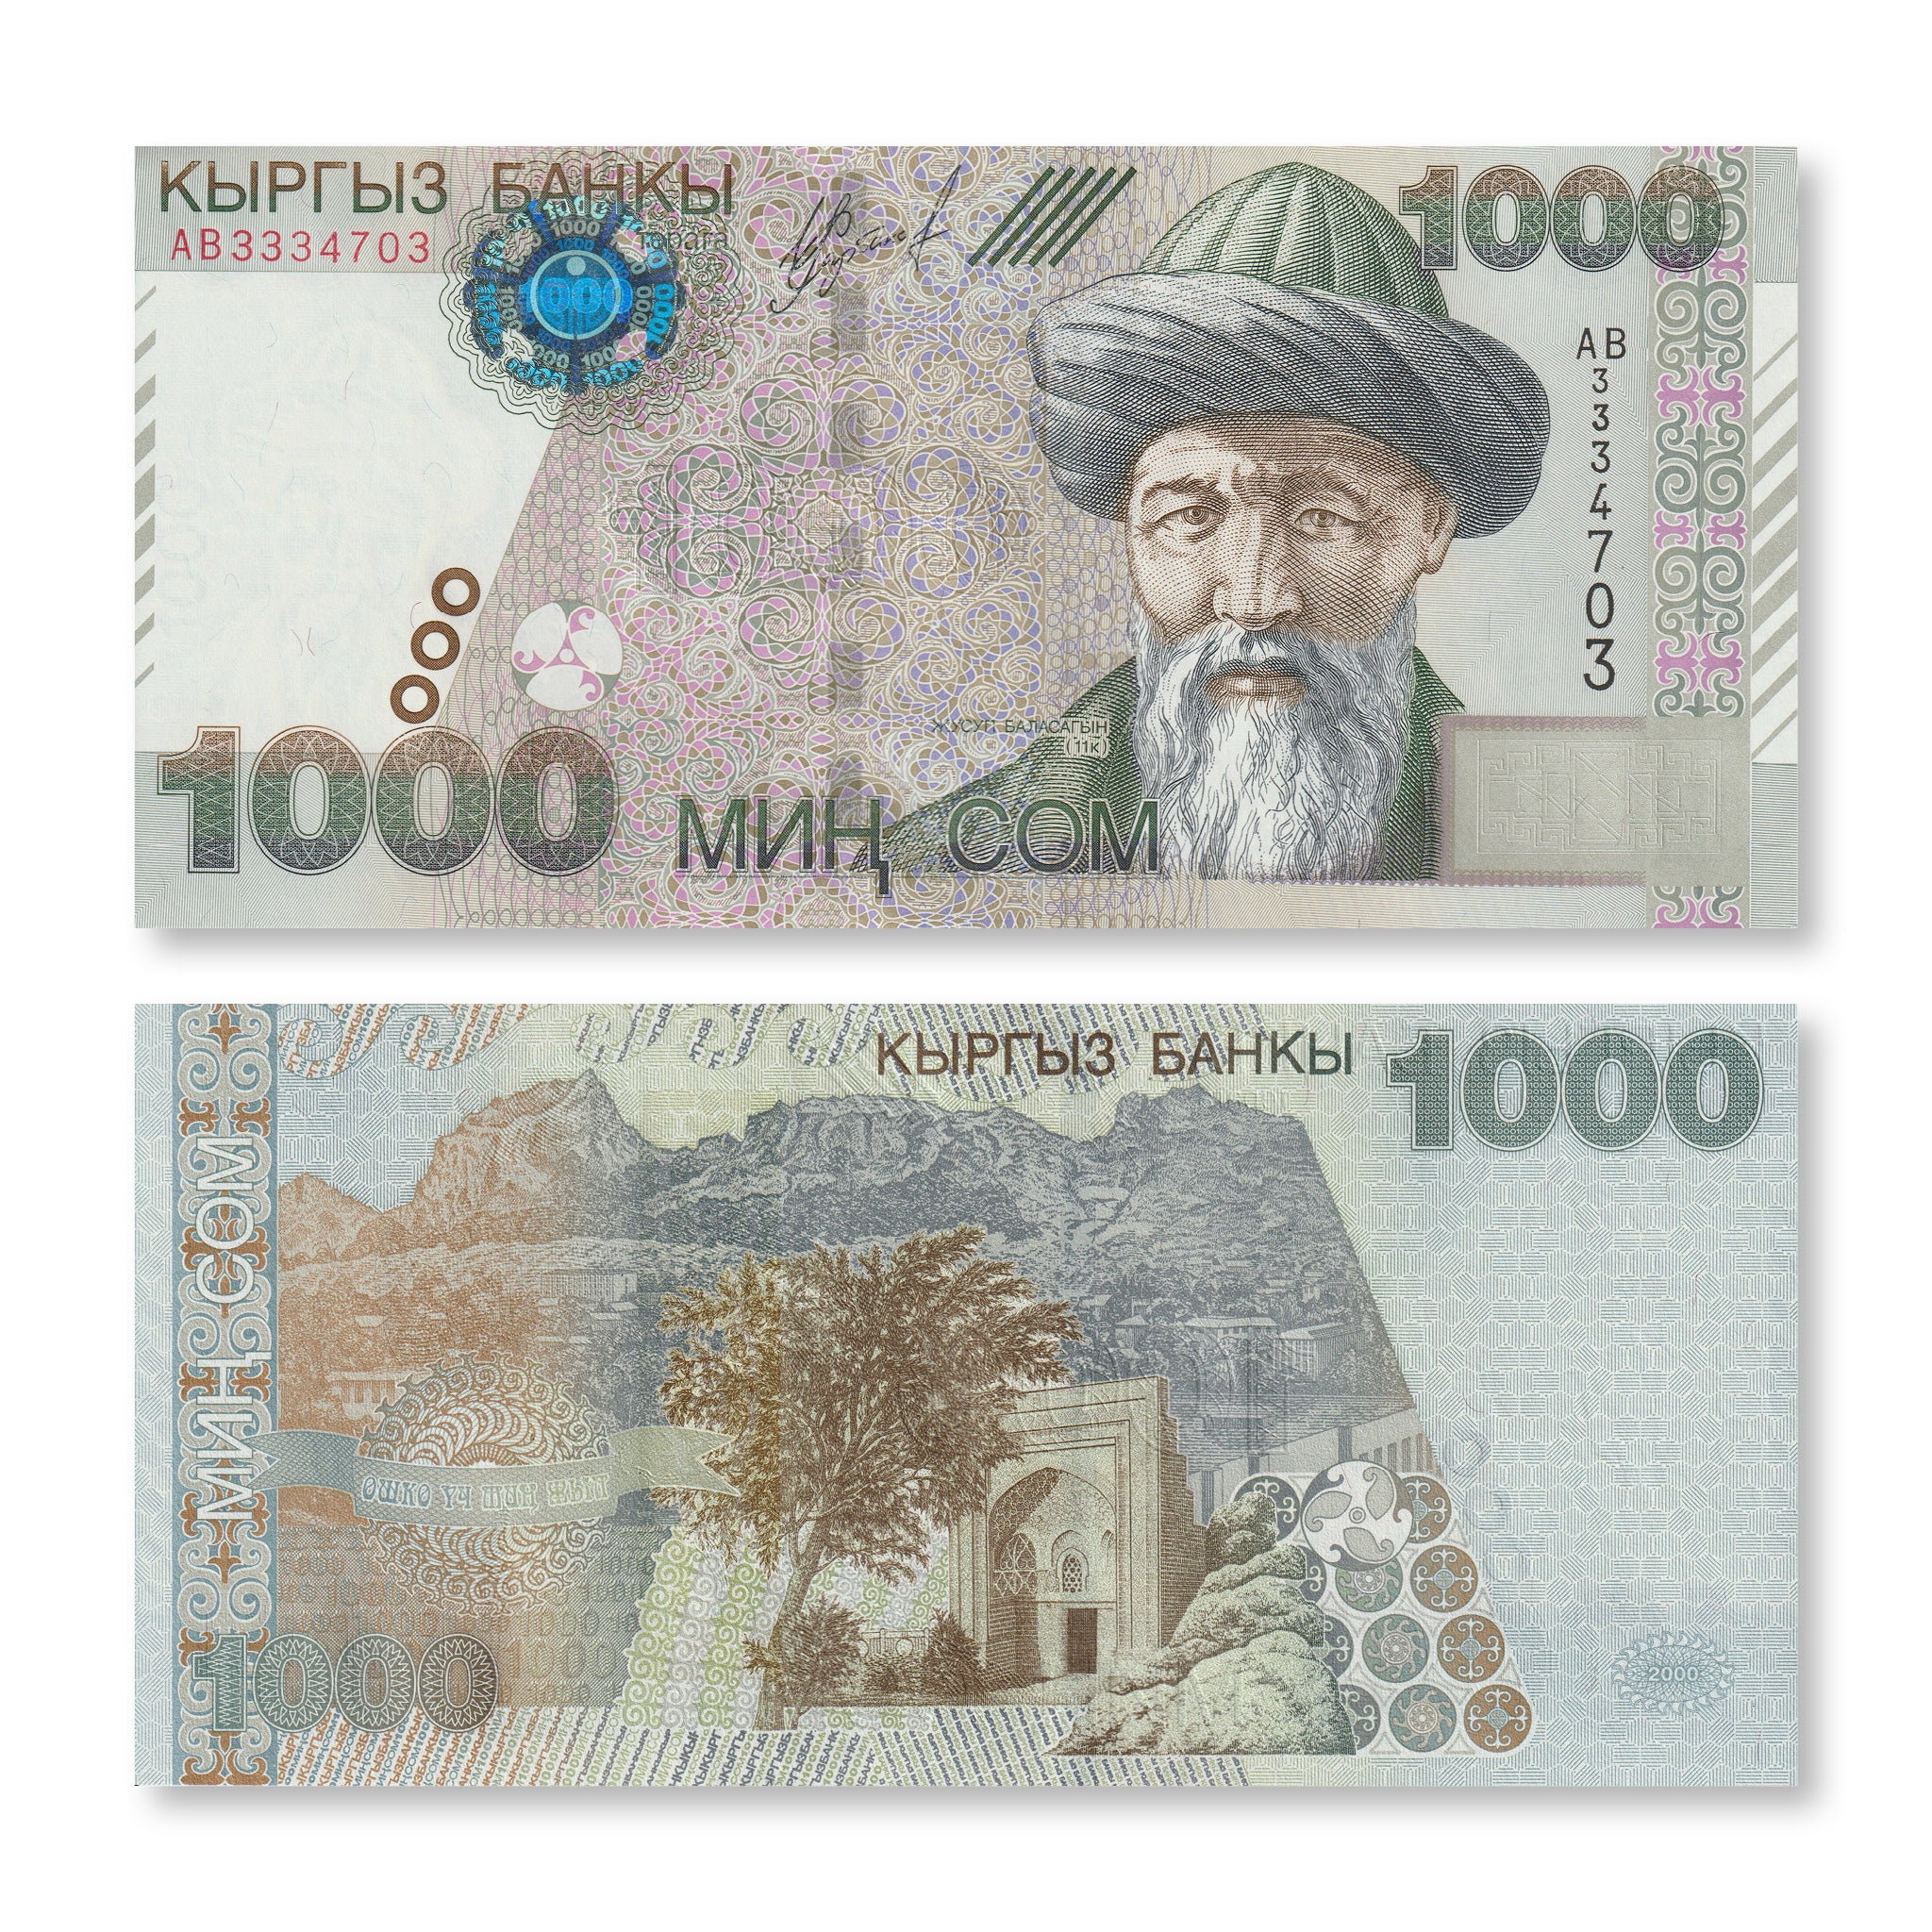 Kyrgyzstan 1000 Som, 2000, B219a, P18, UNC - Robert's World Money - World Banknotes